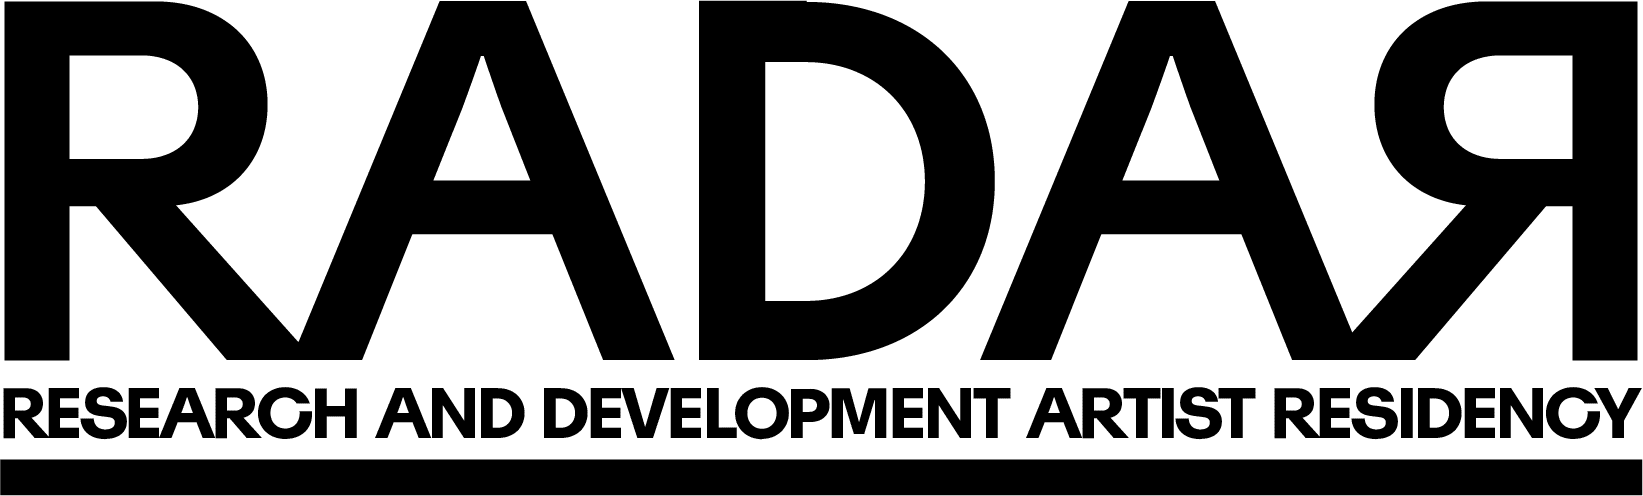 RADAR_Research and Development Artist Residency